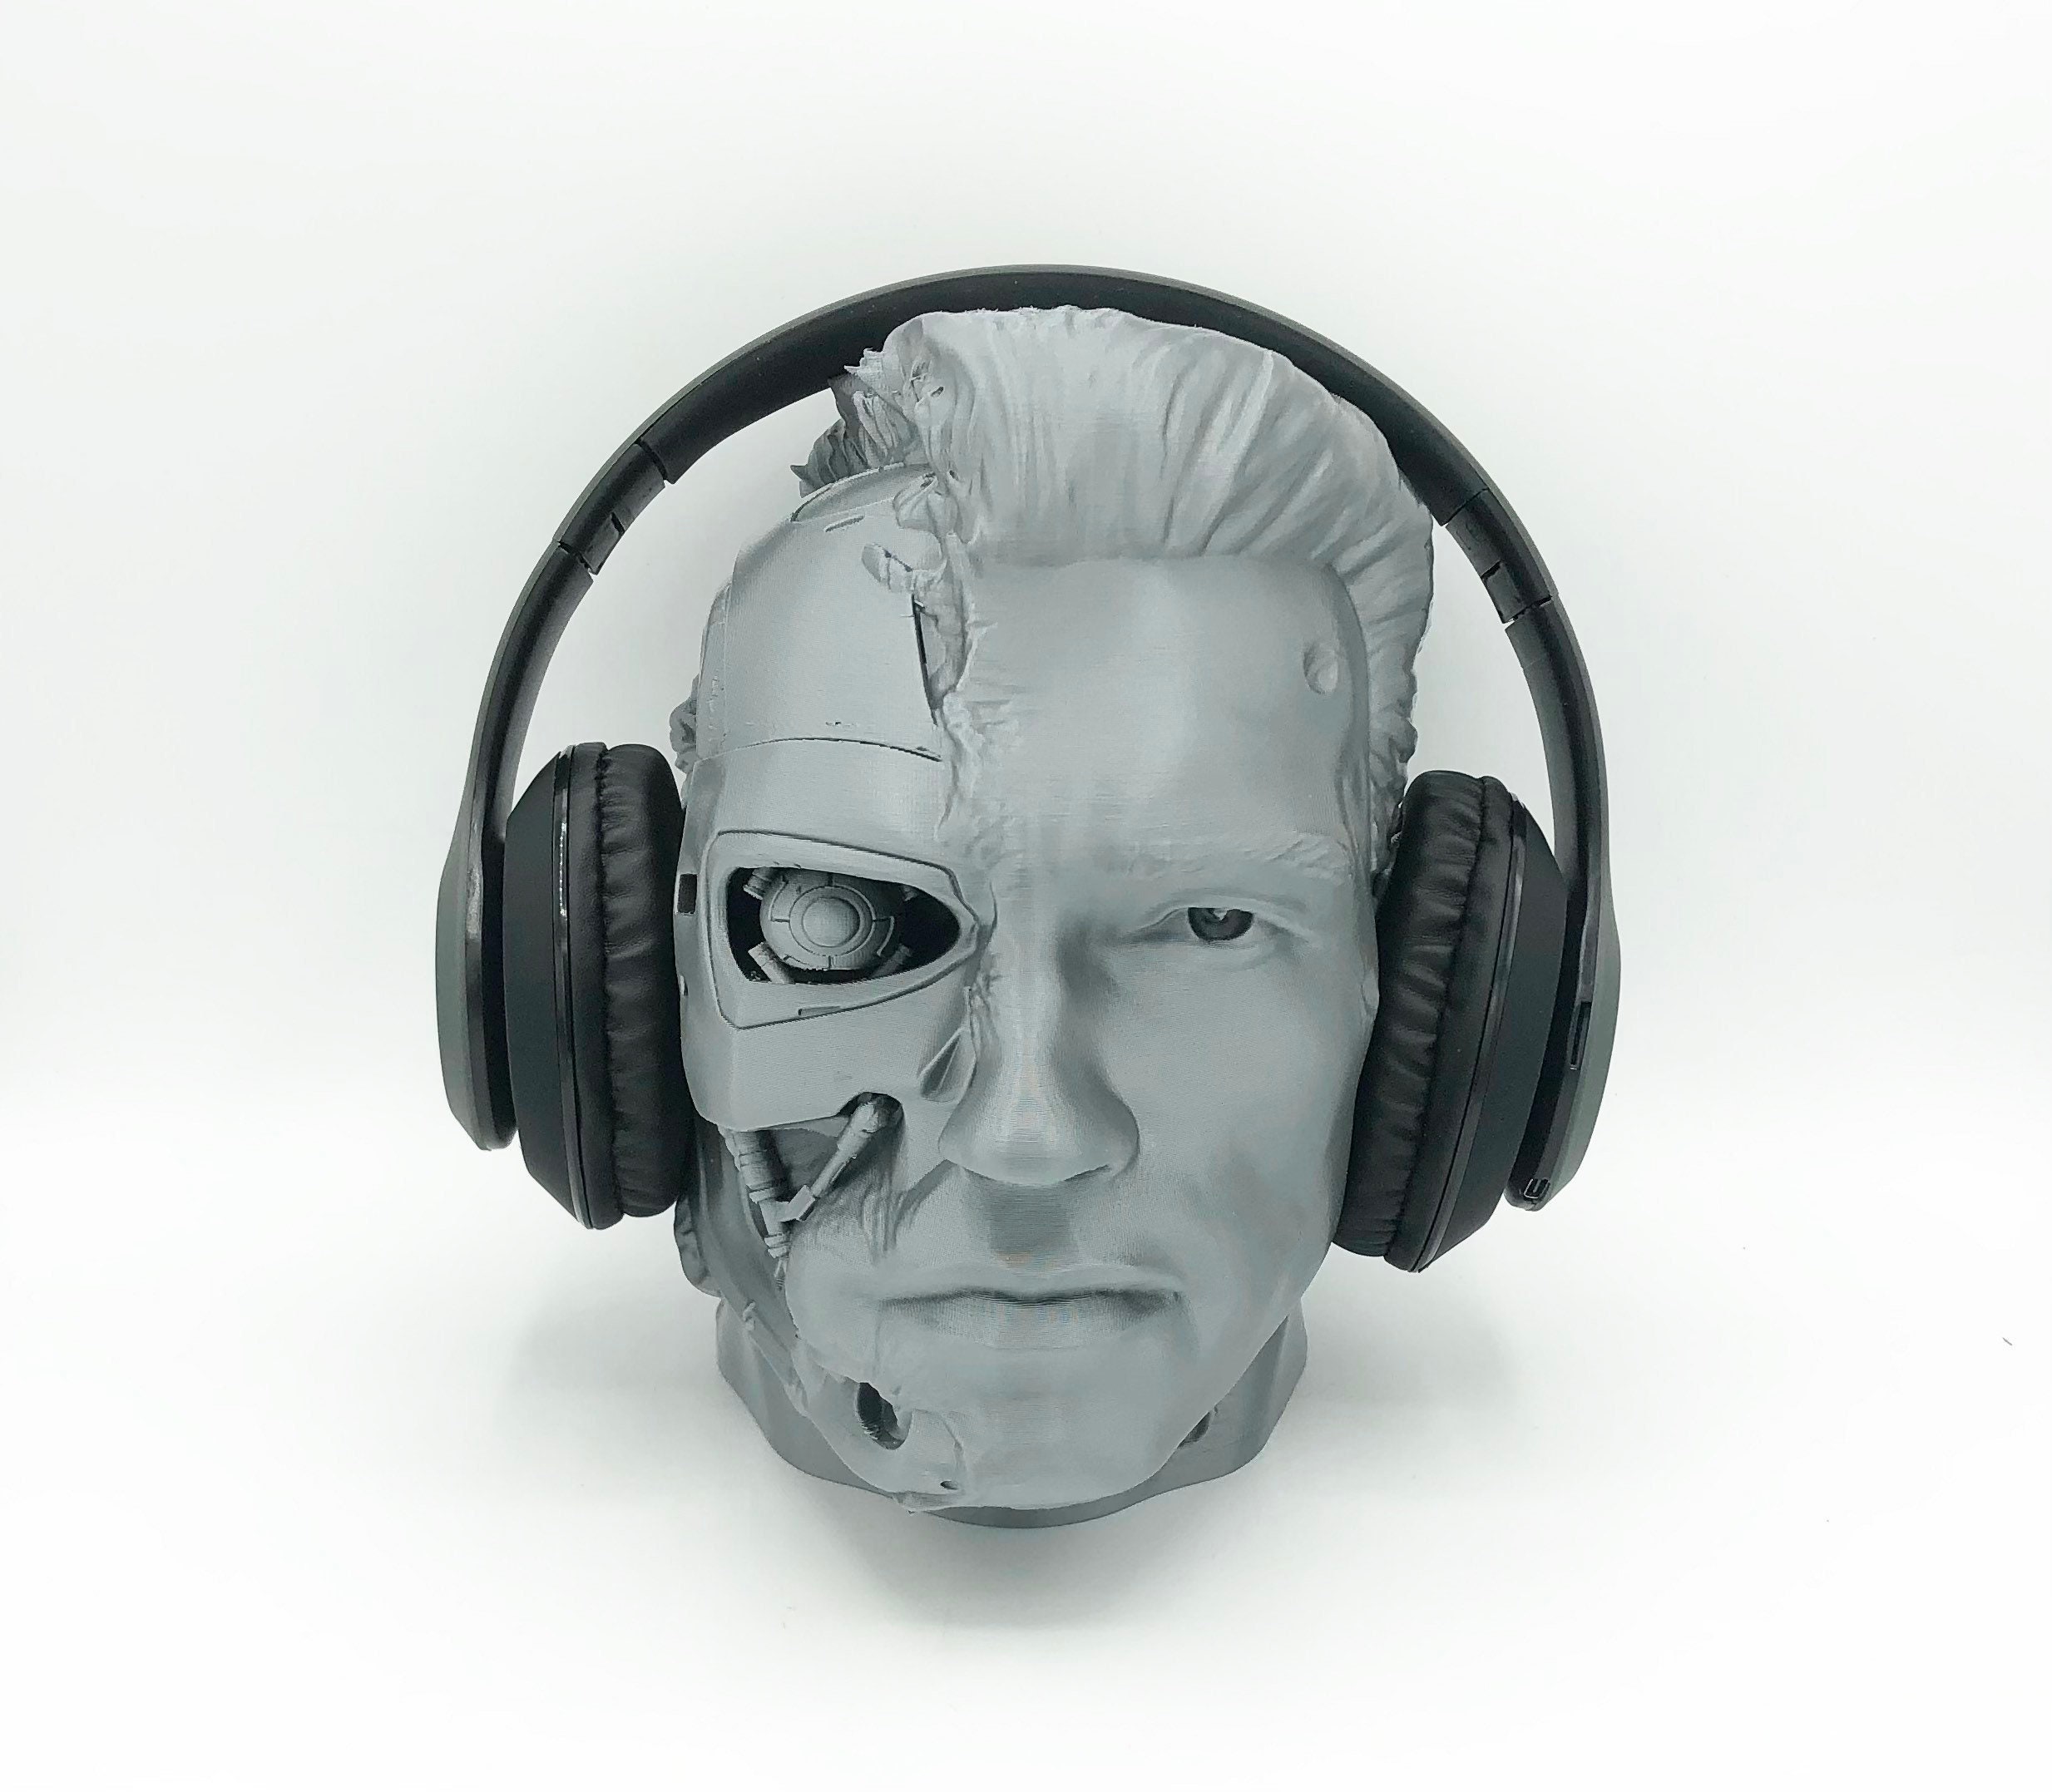 Terminator Headphone Head 3D Printed Stand Bust Etsy